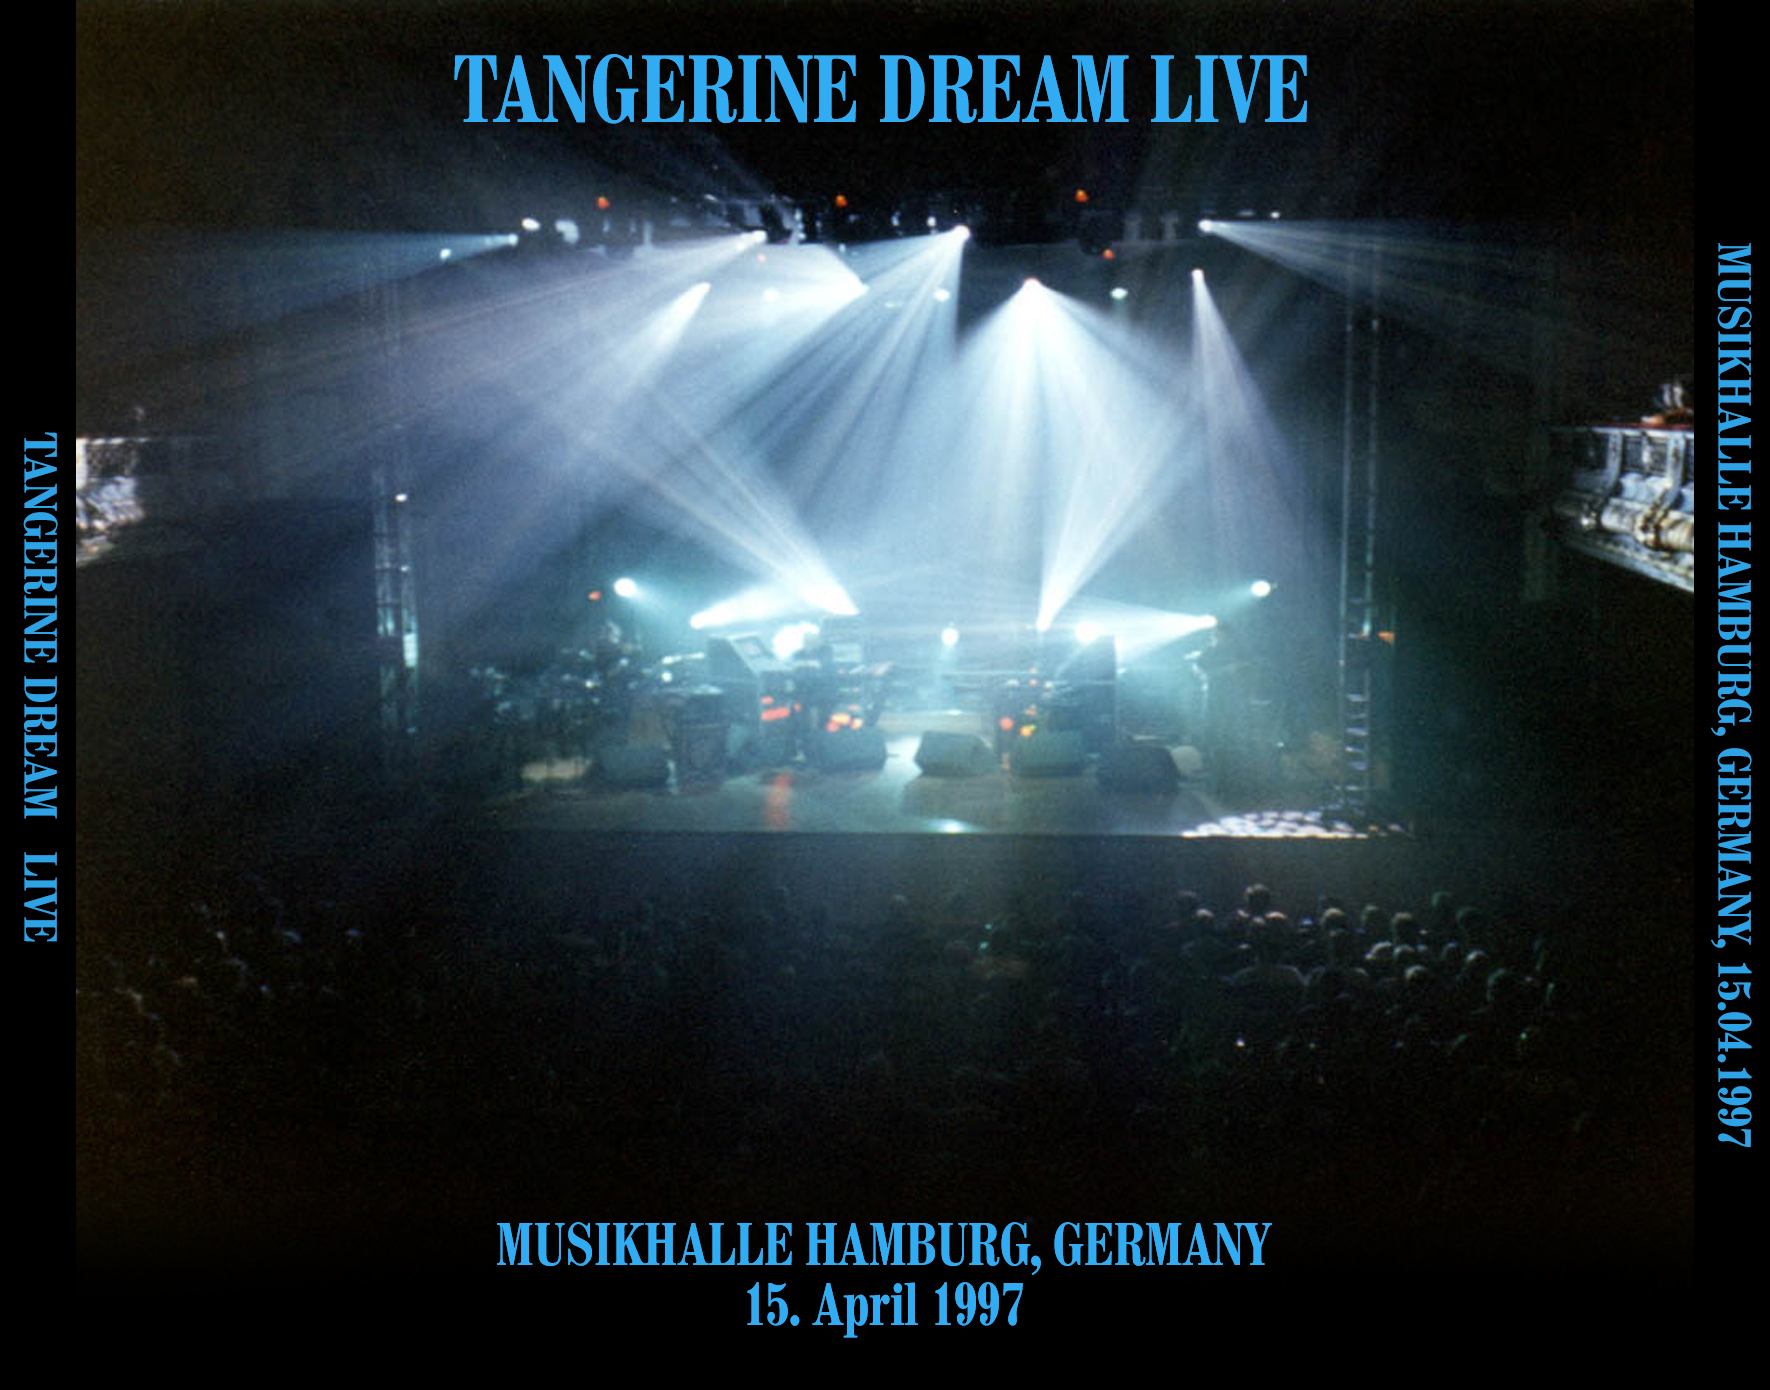 TangerineDream1997-04-15MusikhalleHamburgGermany (1).jpg